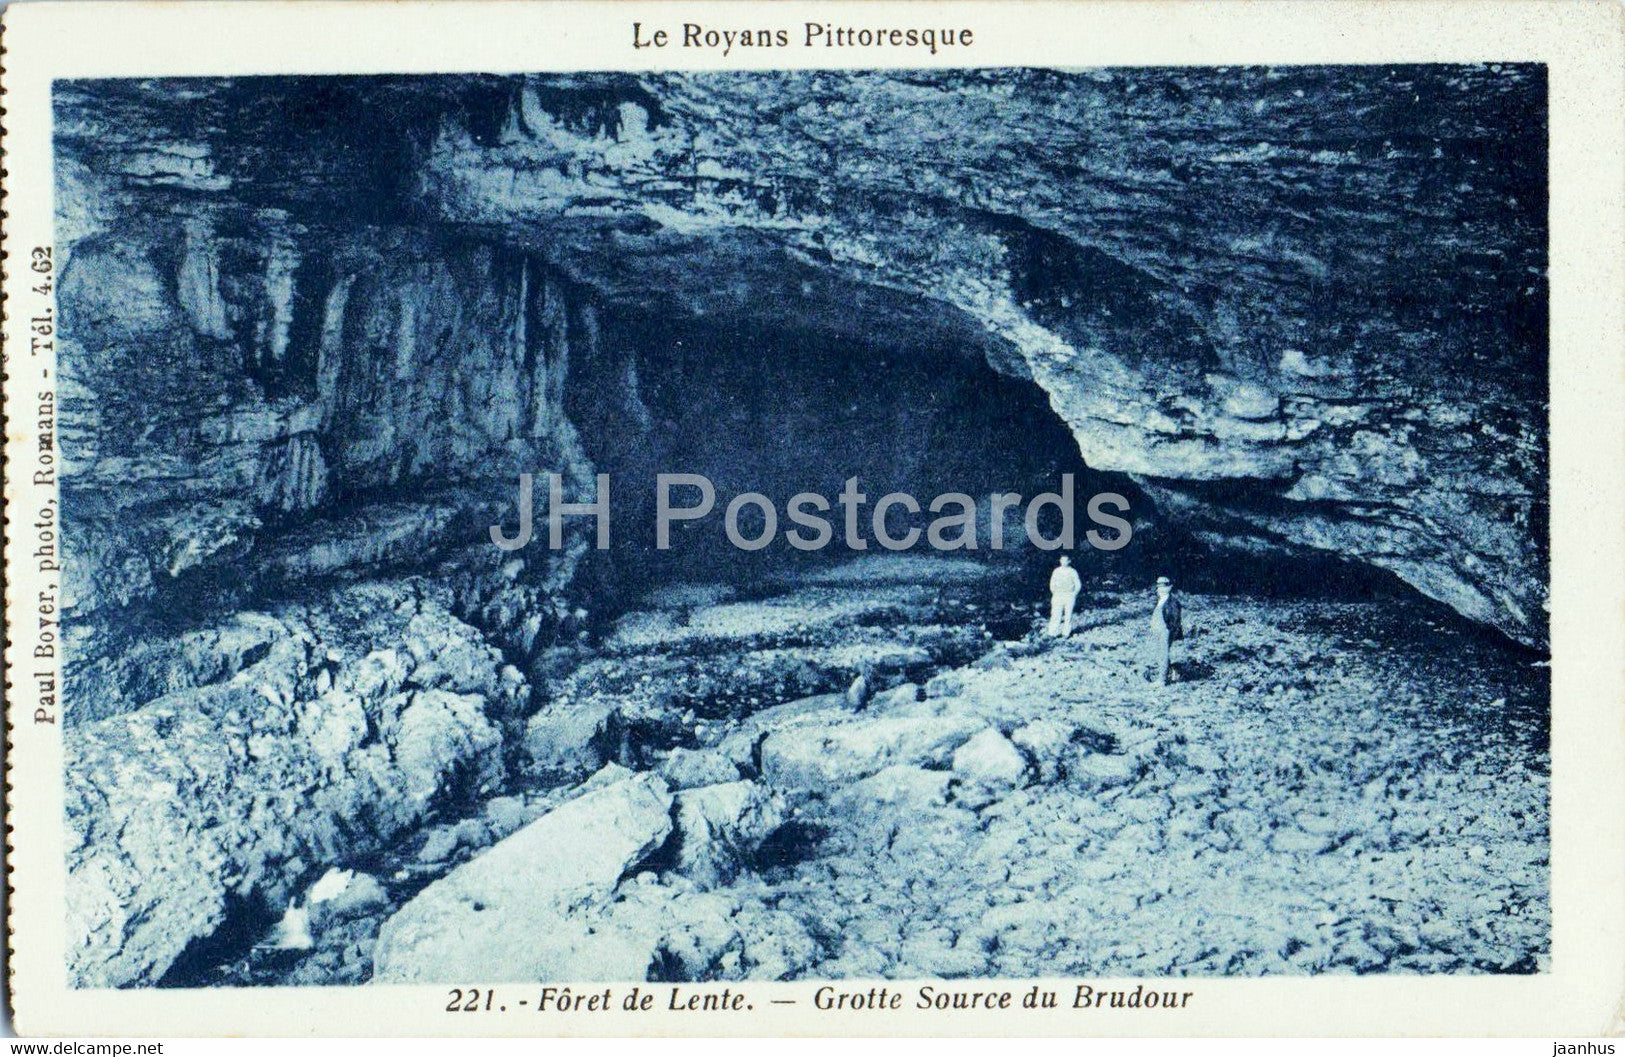 Foret de Lente - Grotte Source du Brudour - cave - 221 - old postcard - France - unused - JH Postcards